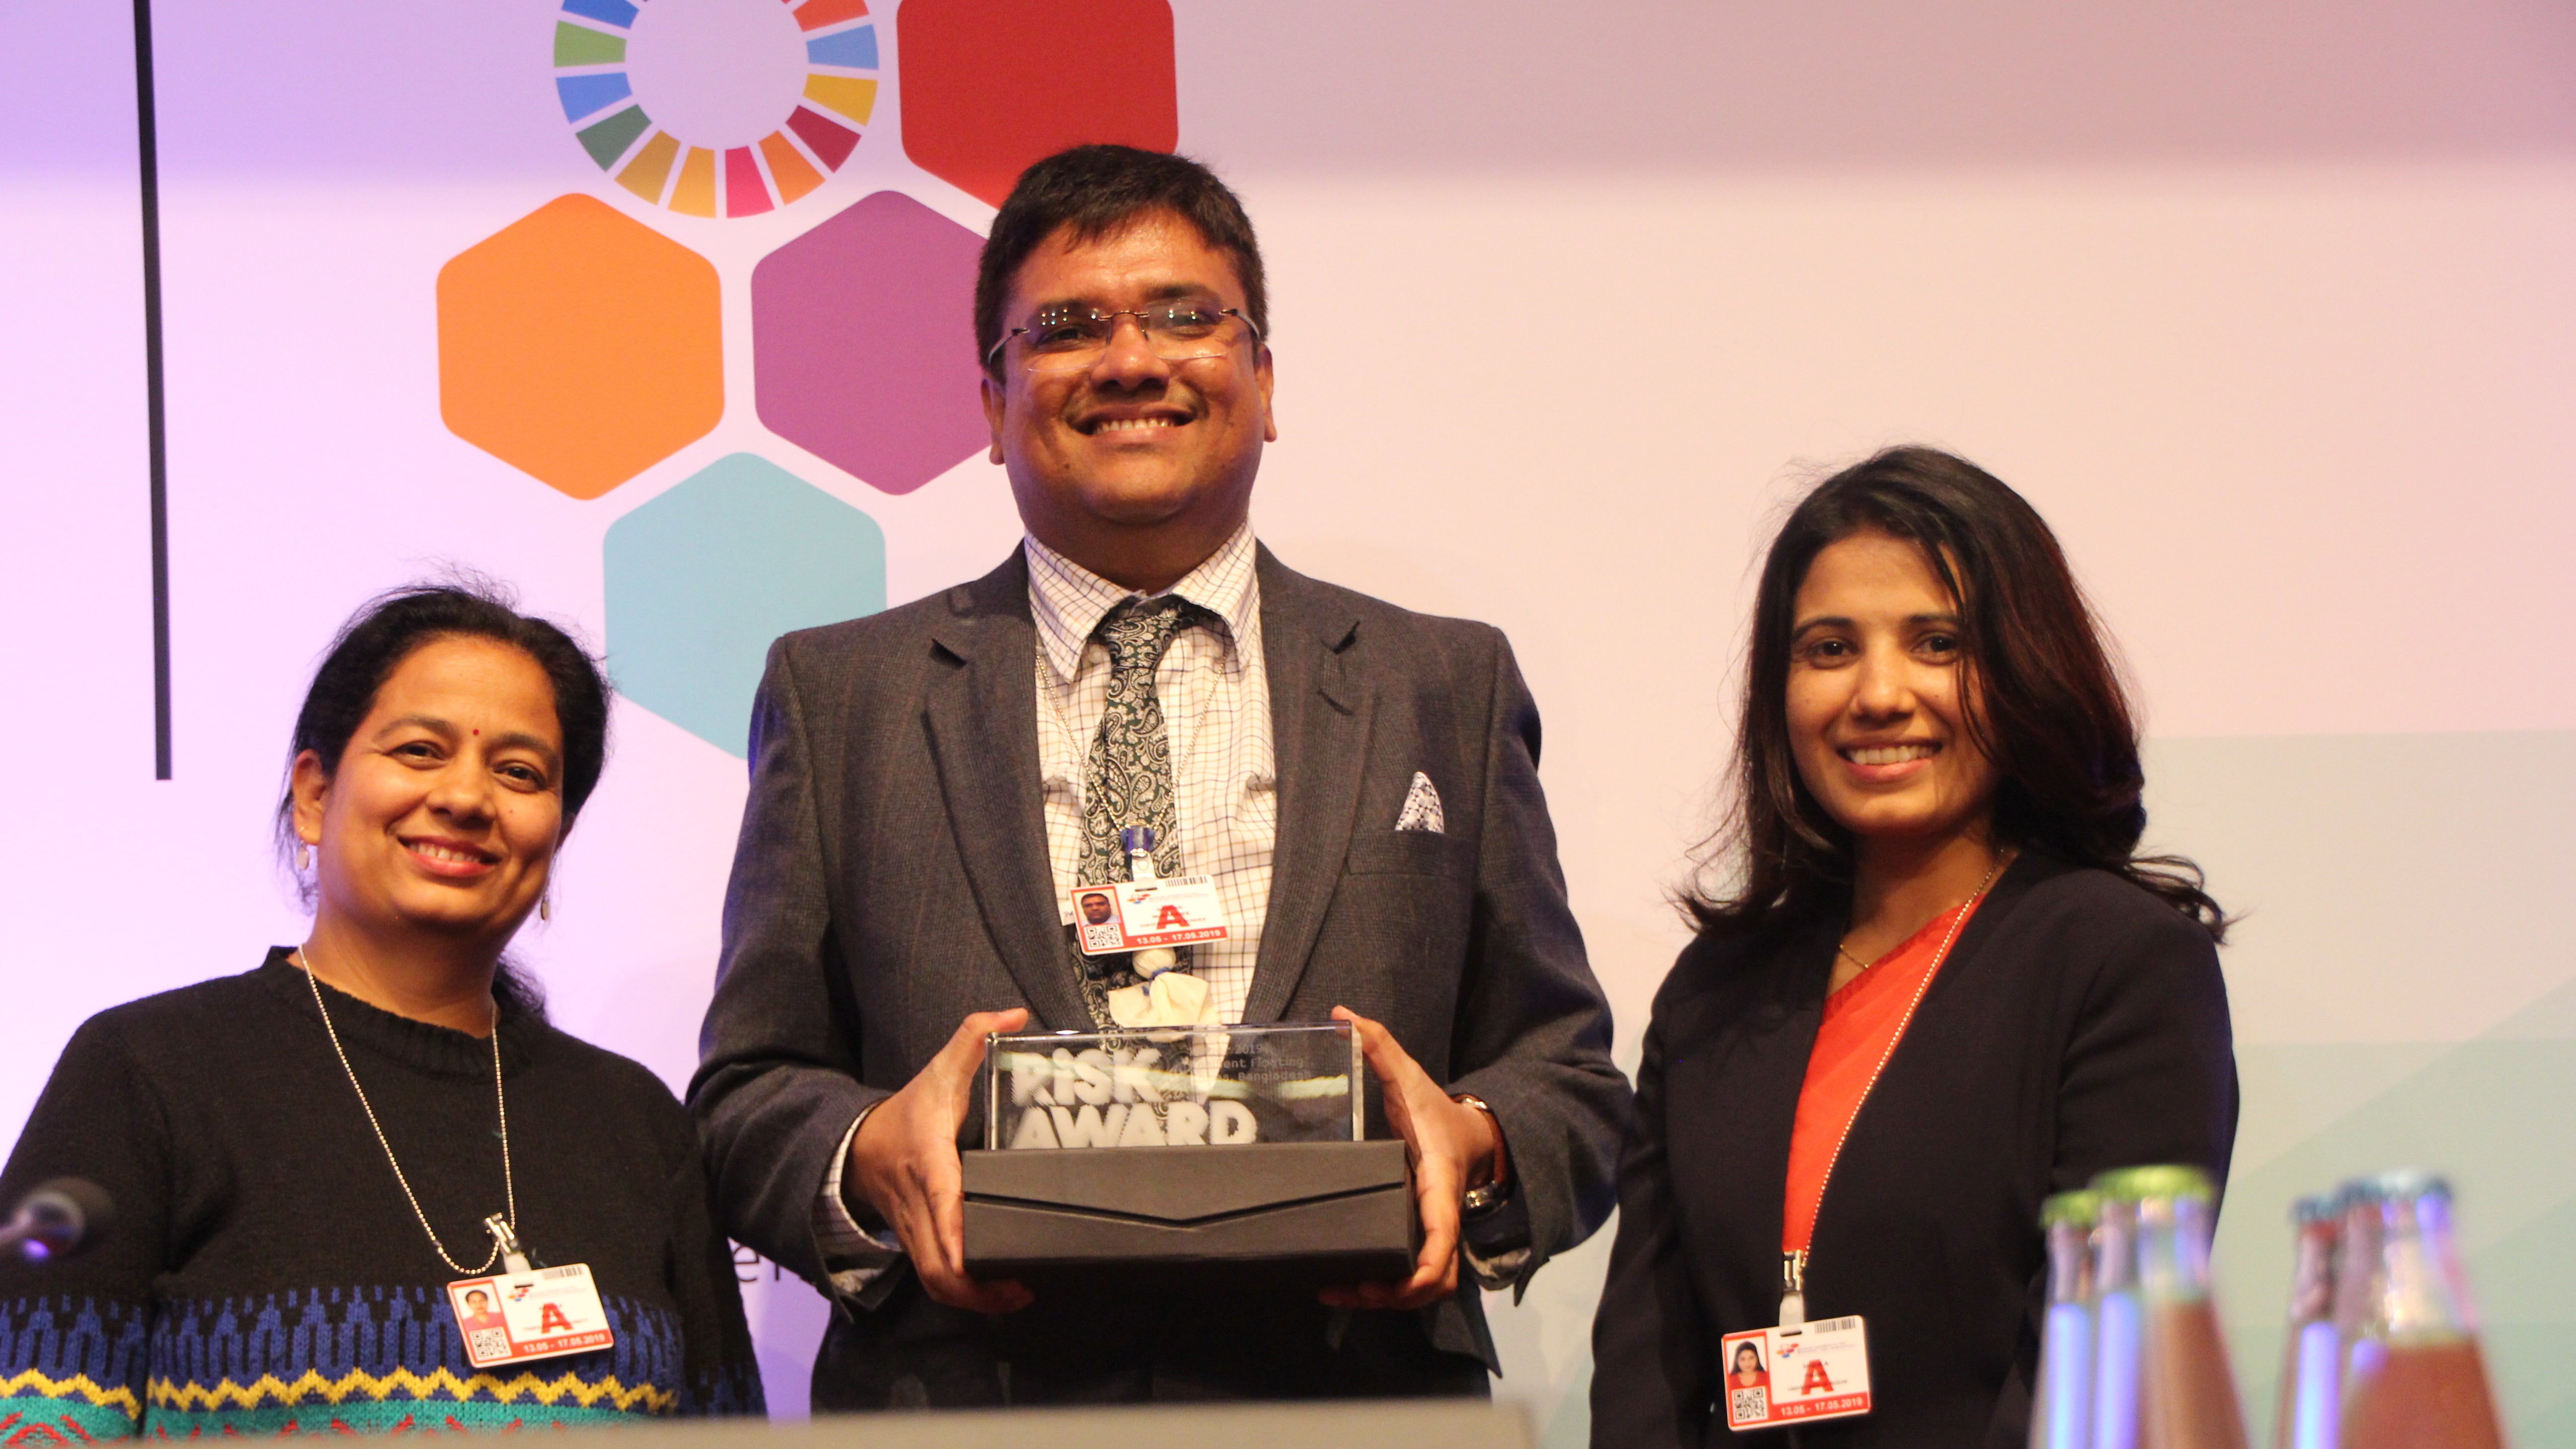 Nandan Mukherjee, winner of the RISK Award 2019, together with Apsara Pandey and Sushila Pandel, winners of the RISK Award 2017.